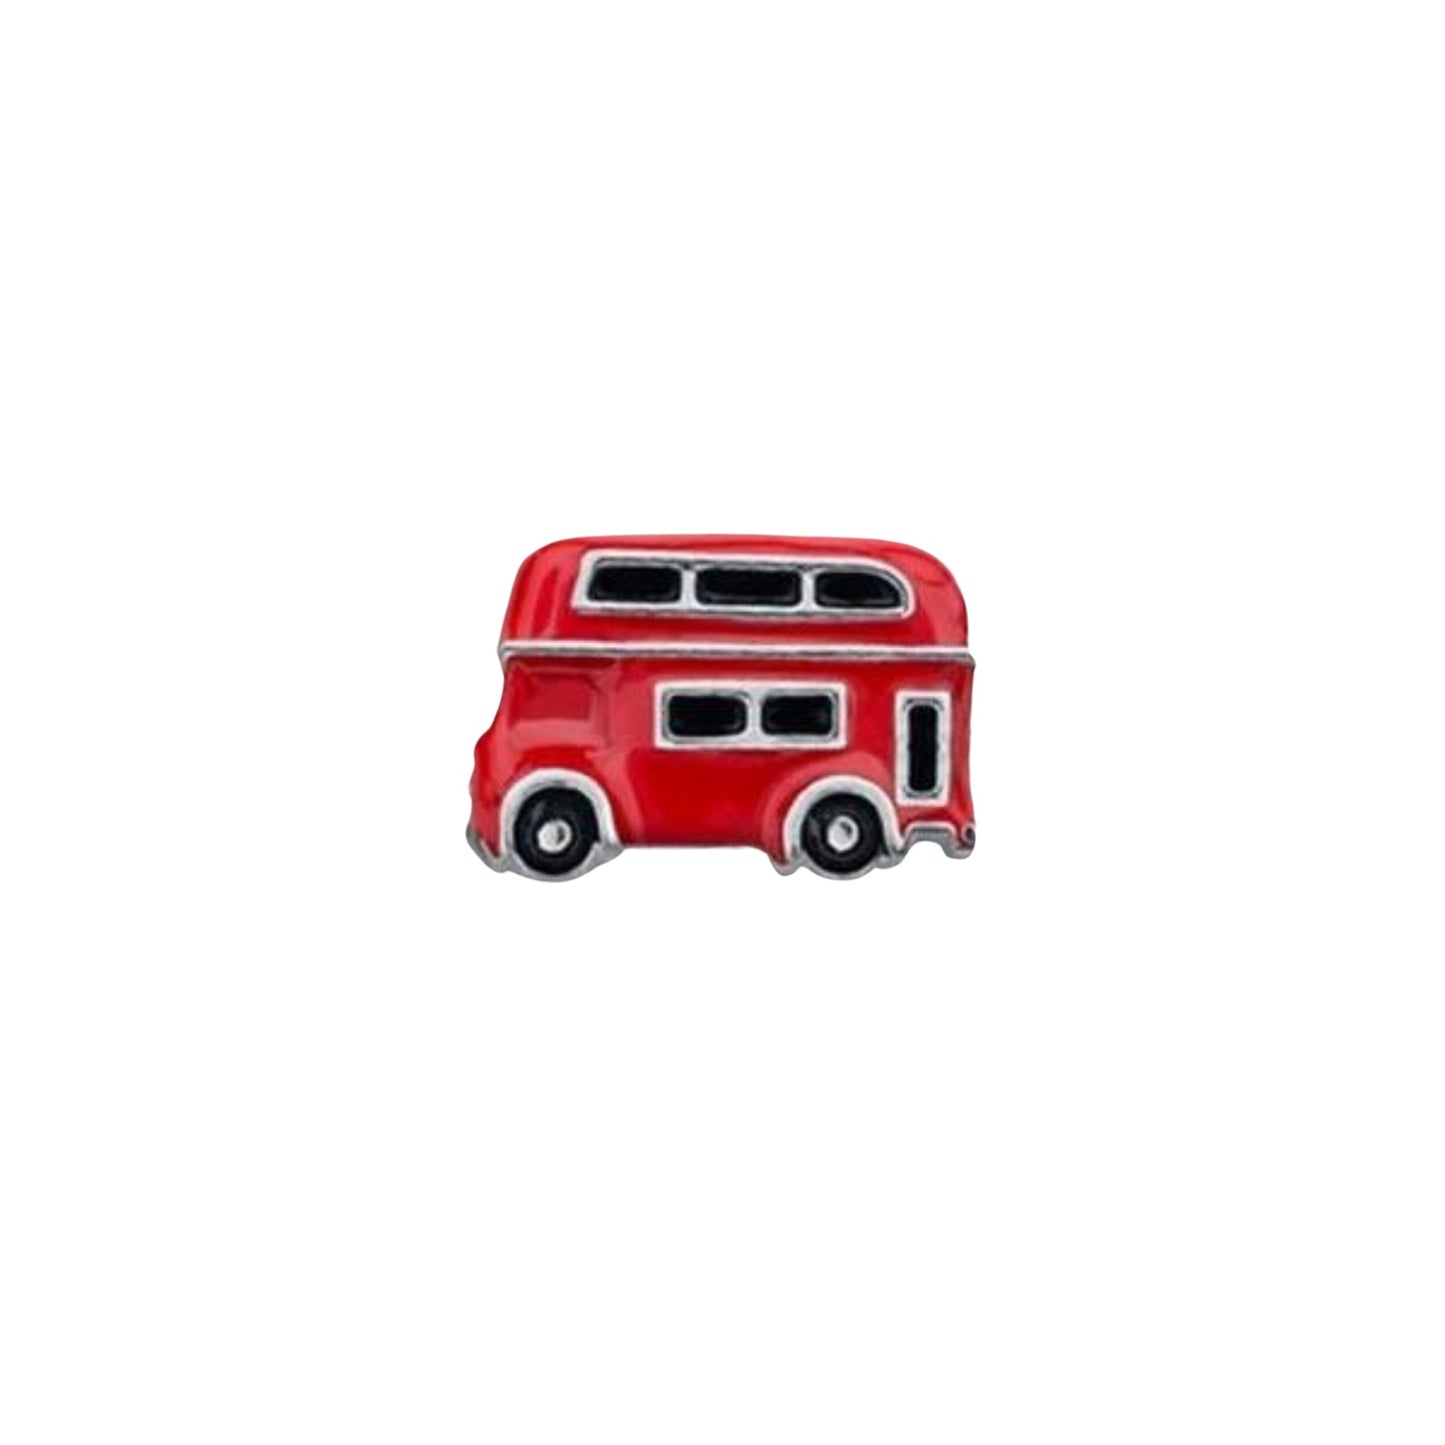 Memory Locket Charm - London bus - The Little Jewellery Company